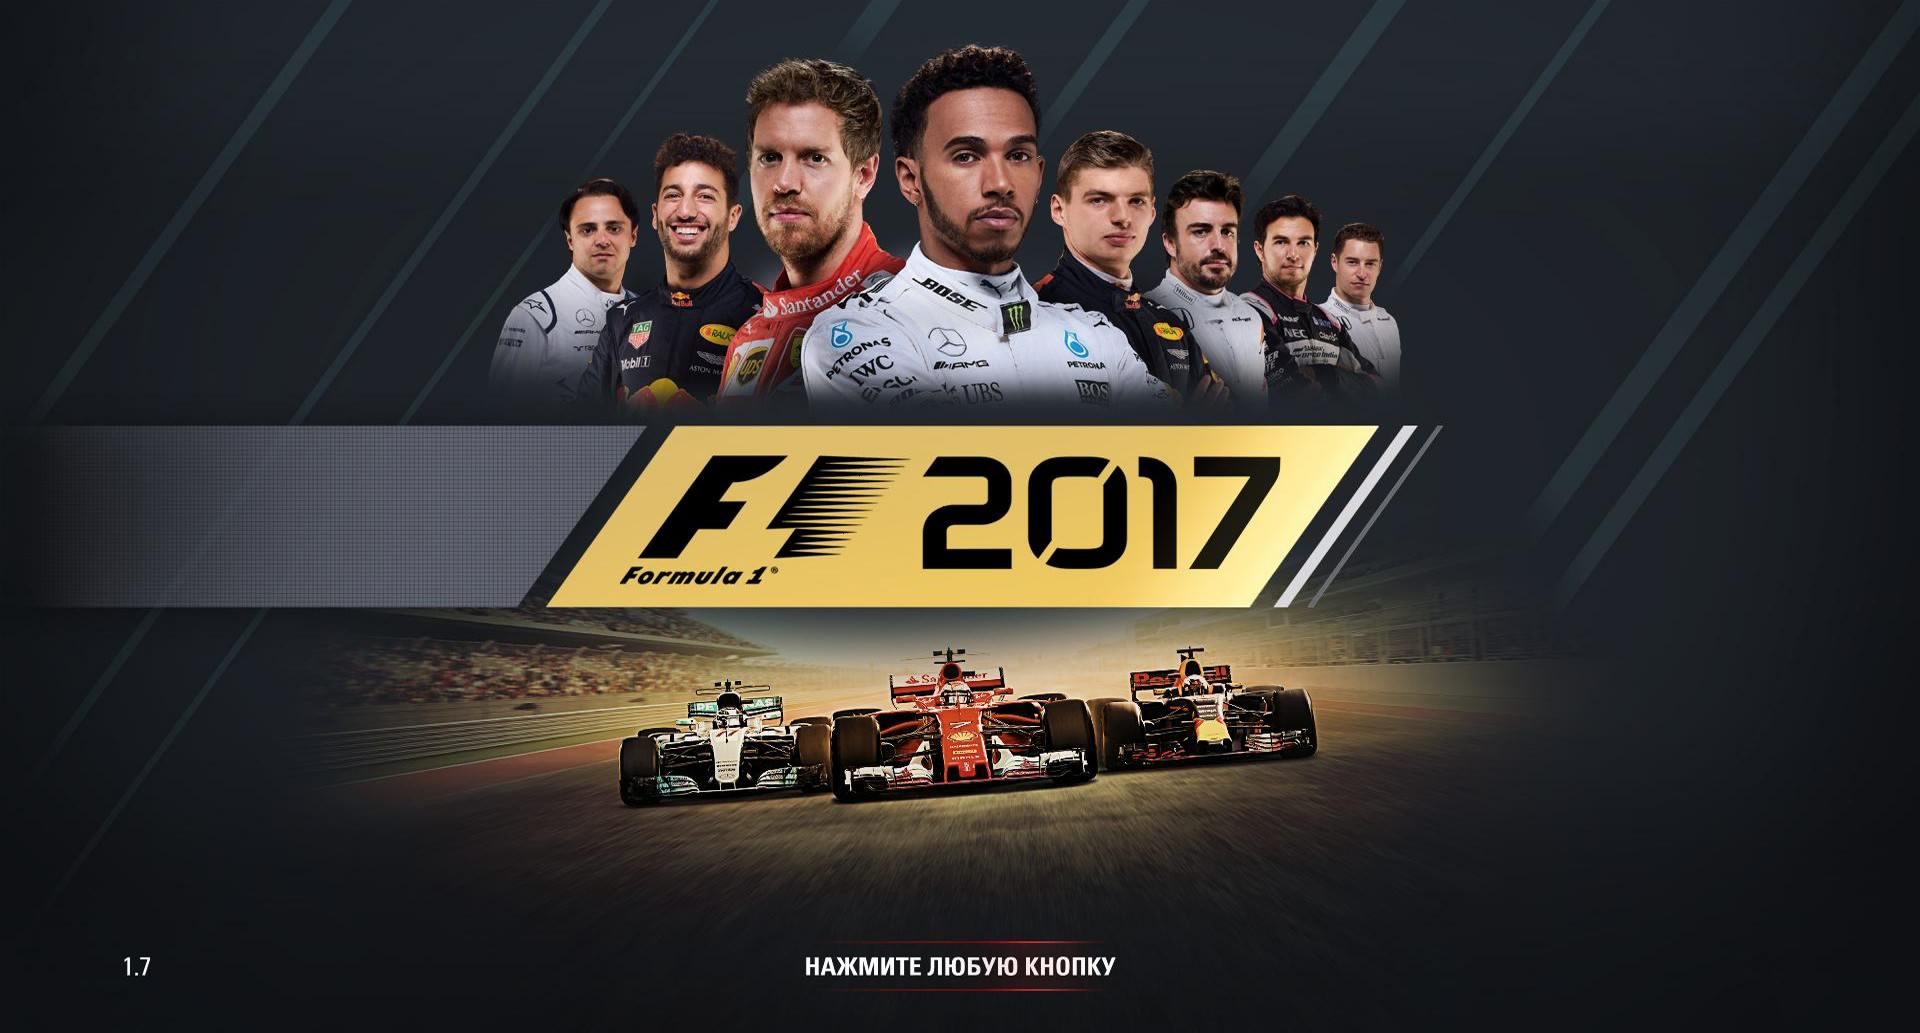 24 1 2016. Ф1 2017 игра. F1 2017 EA Sports. Формула 1 2017. F1 2017 обложка.